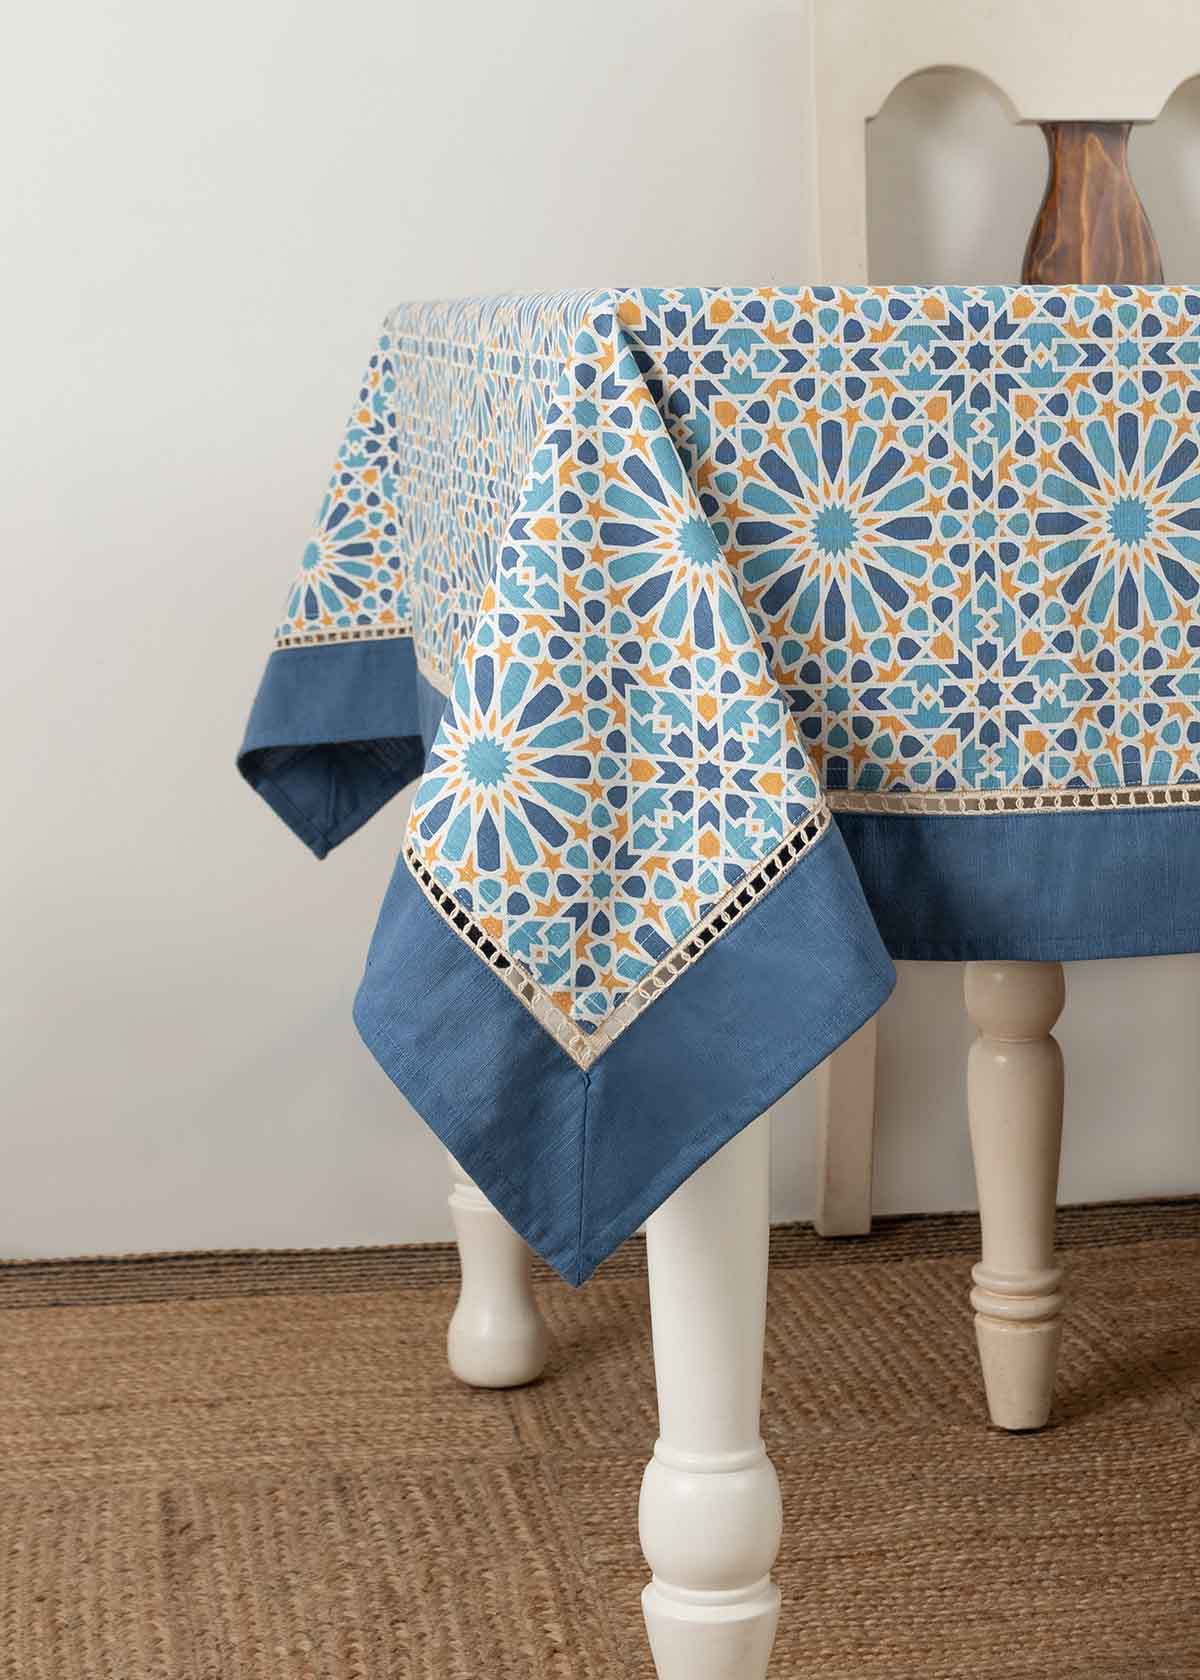 Arabesque Printed Cotton Table Cloth - Blue